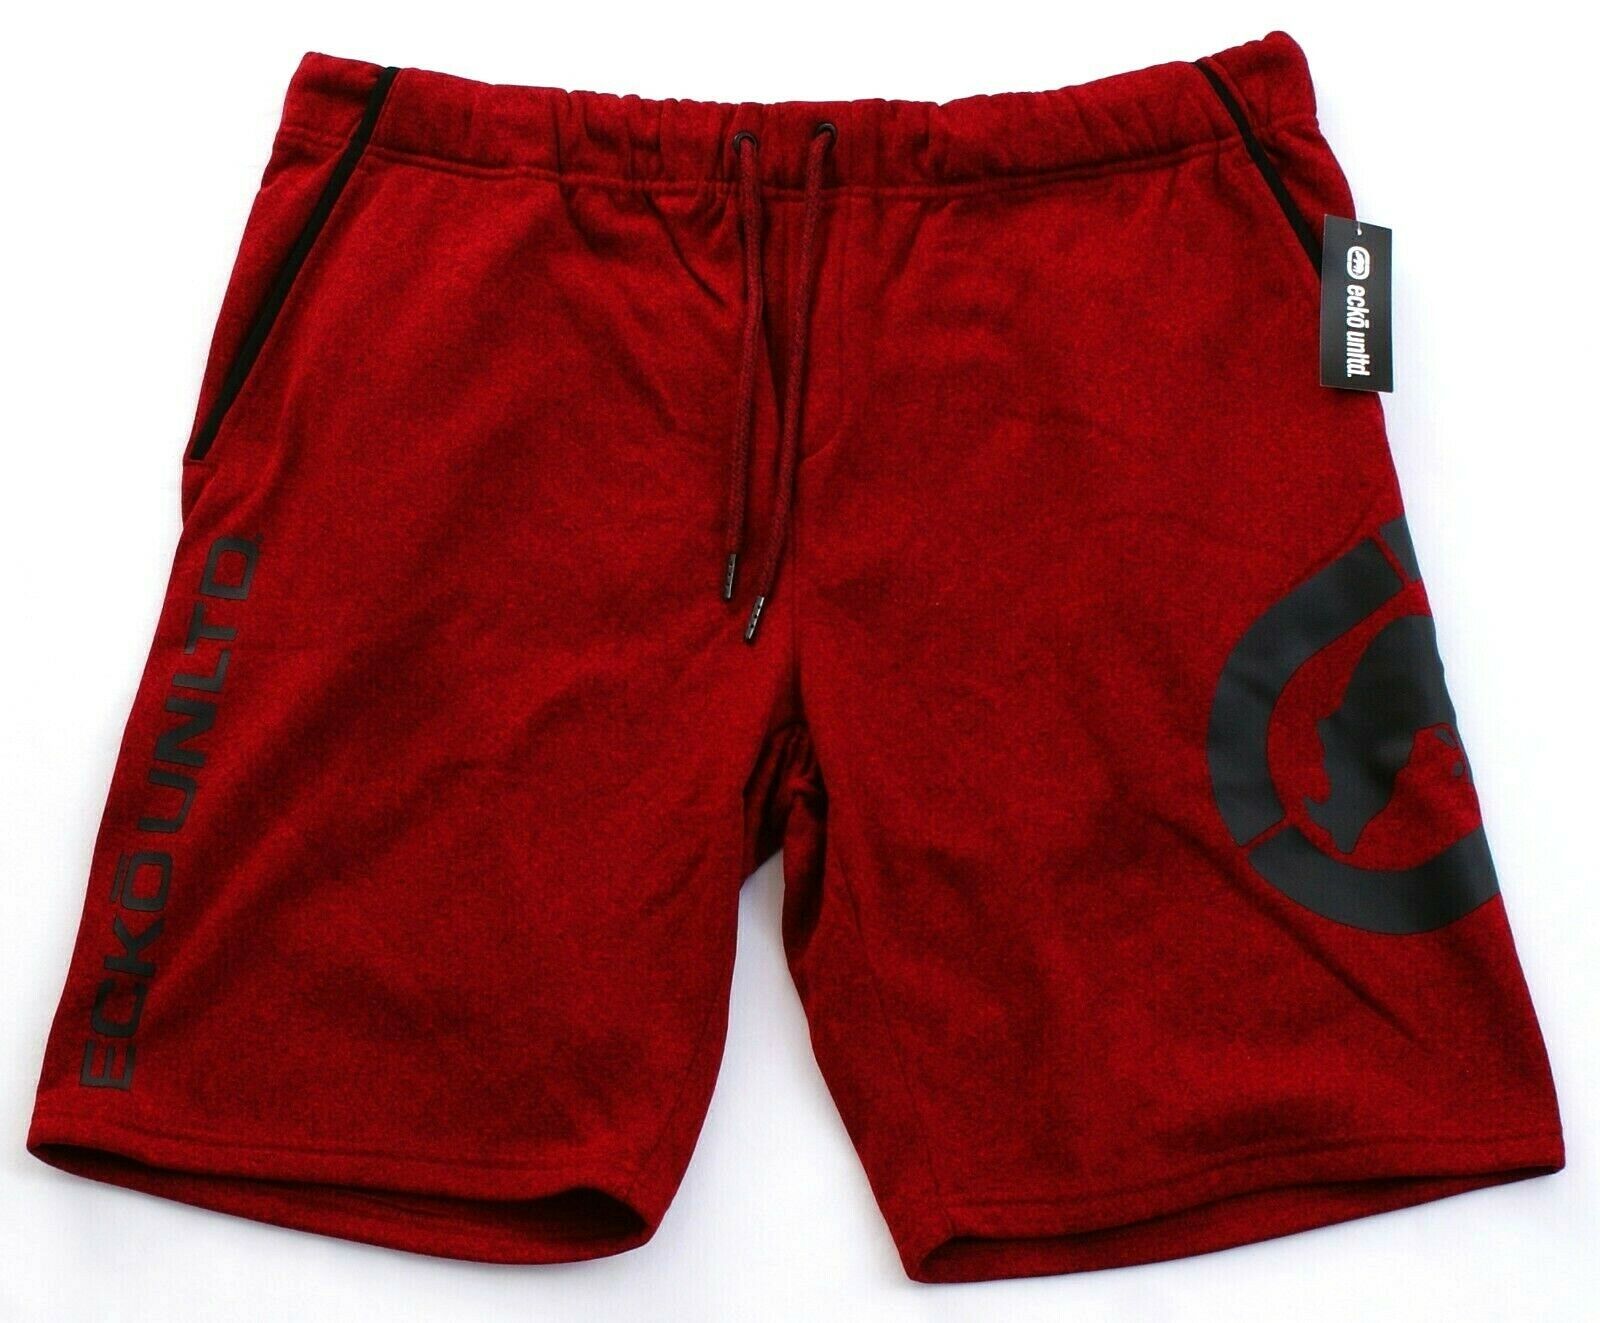 Ecko Unltd Logo Marled Red Sweat Shorts with Fleece Interior Men's NWT - Shorts